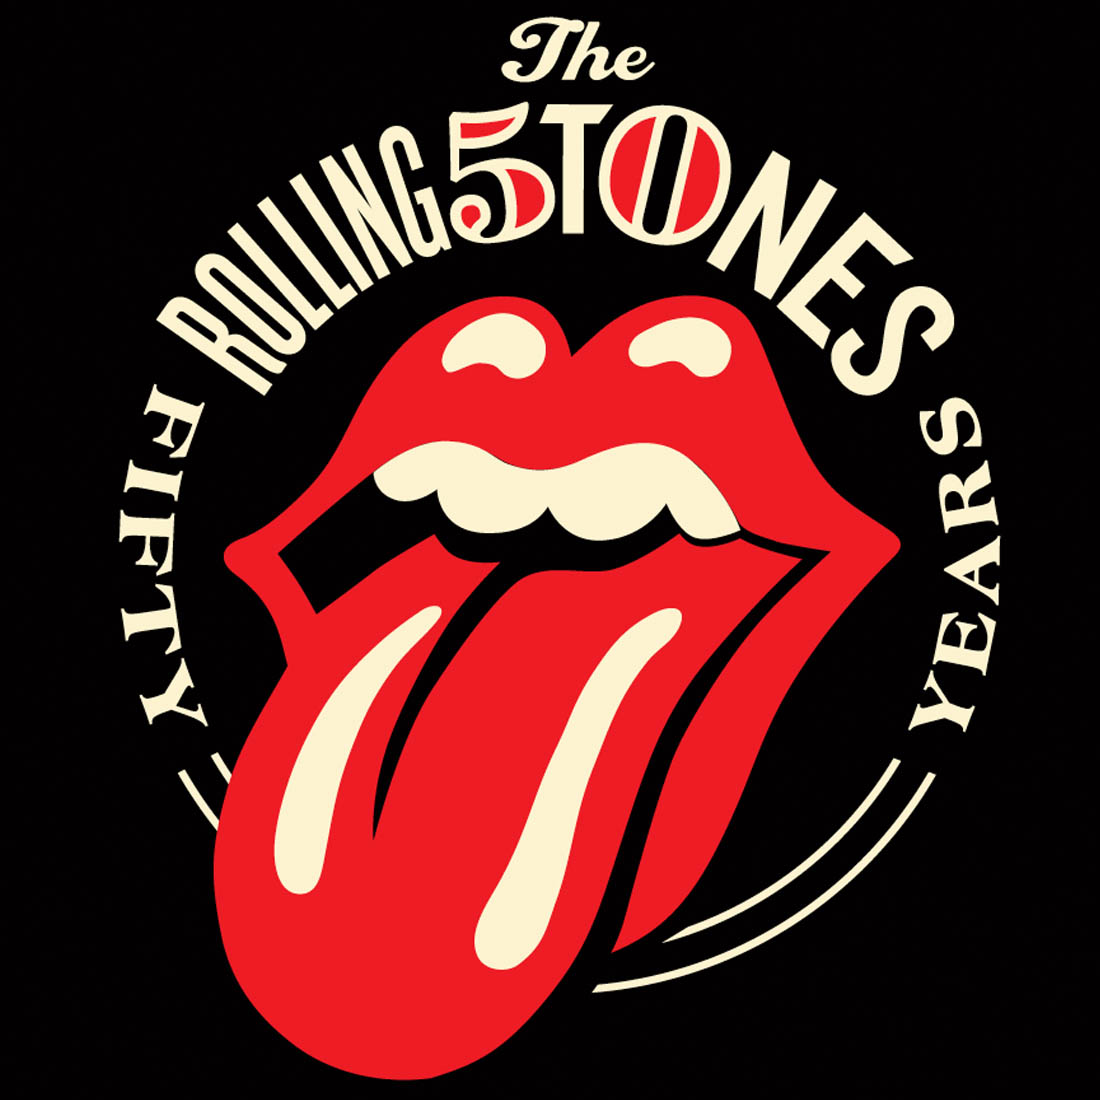 Vintage Rolling Stones logo free image download